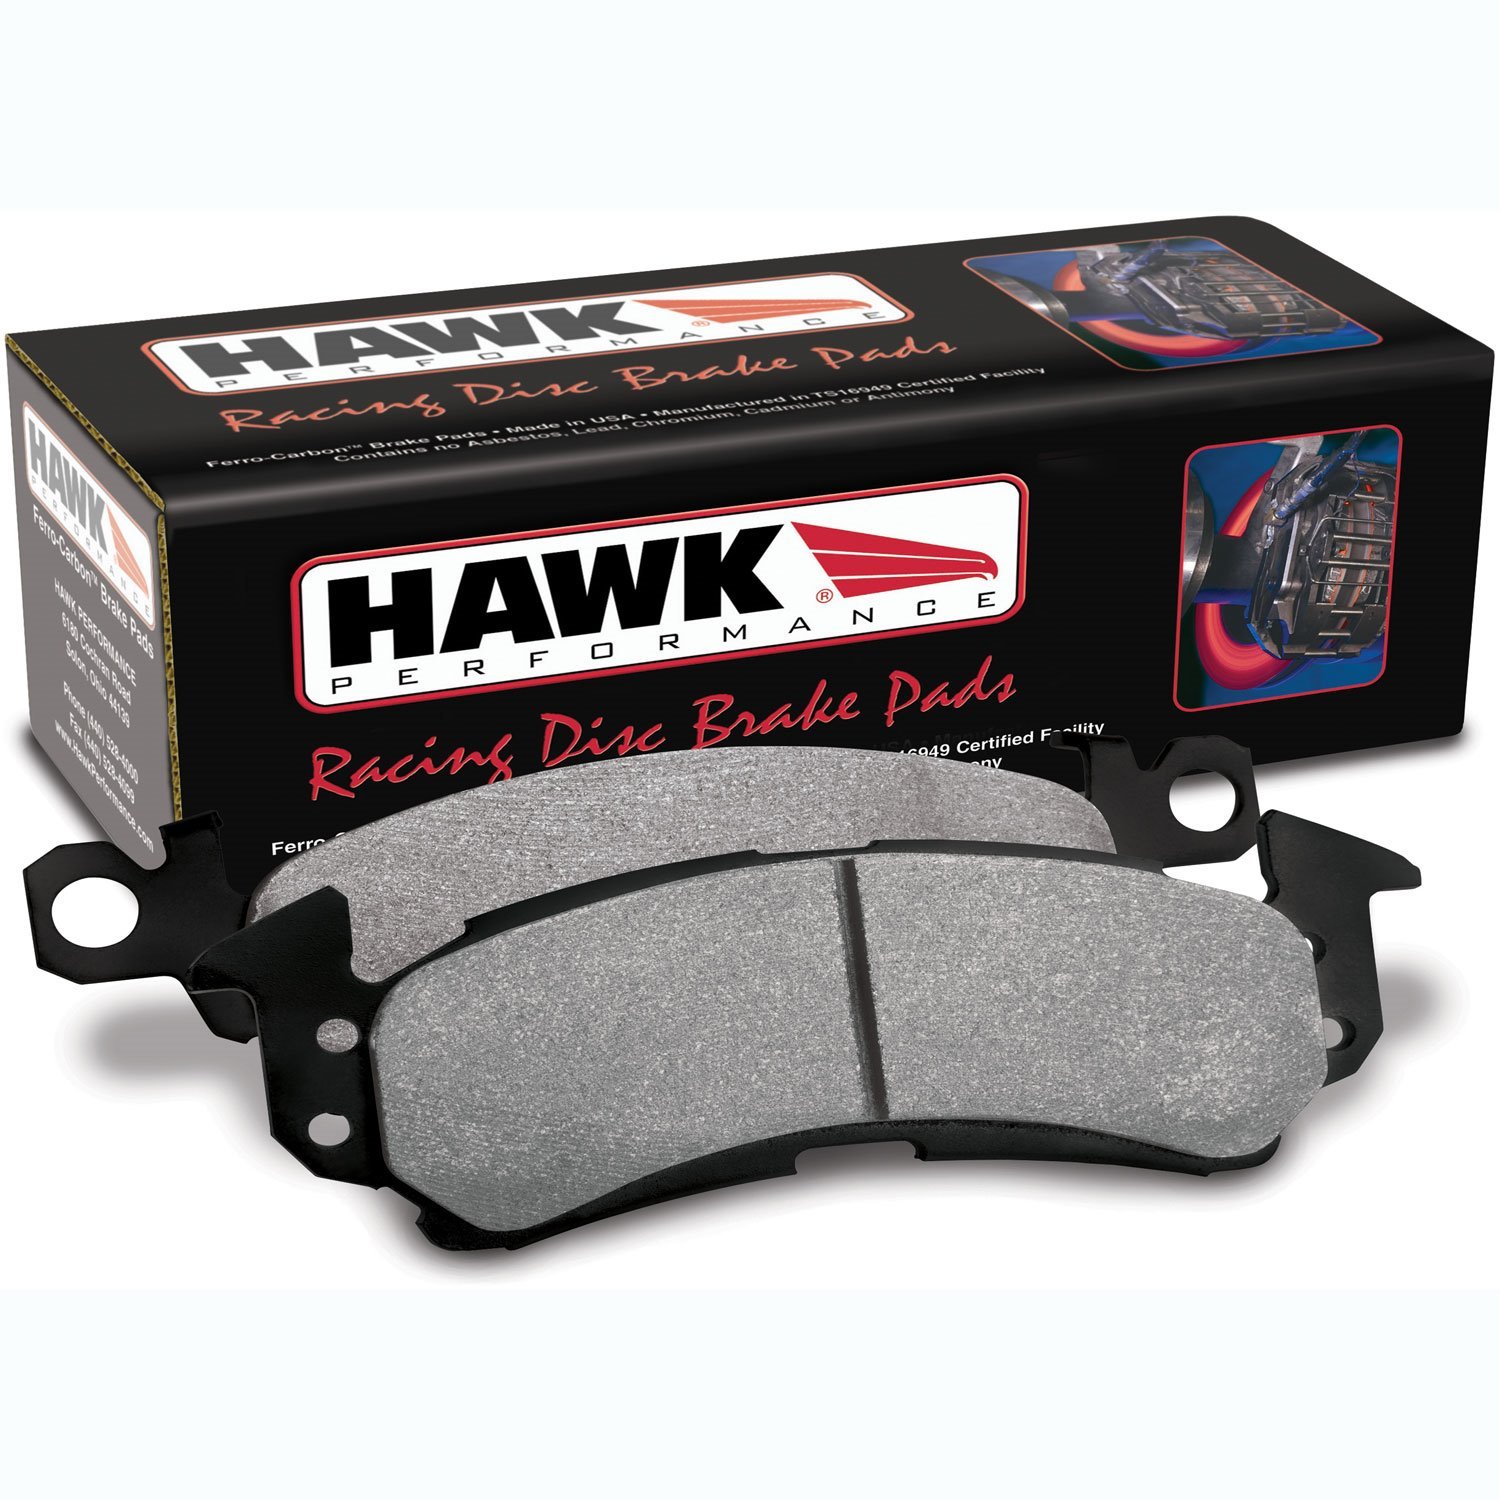 Disc Brake Pad HP Plus w/0.626 Thickness